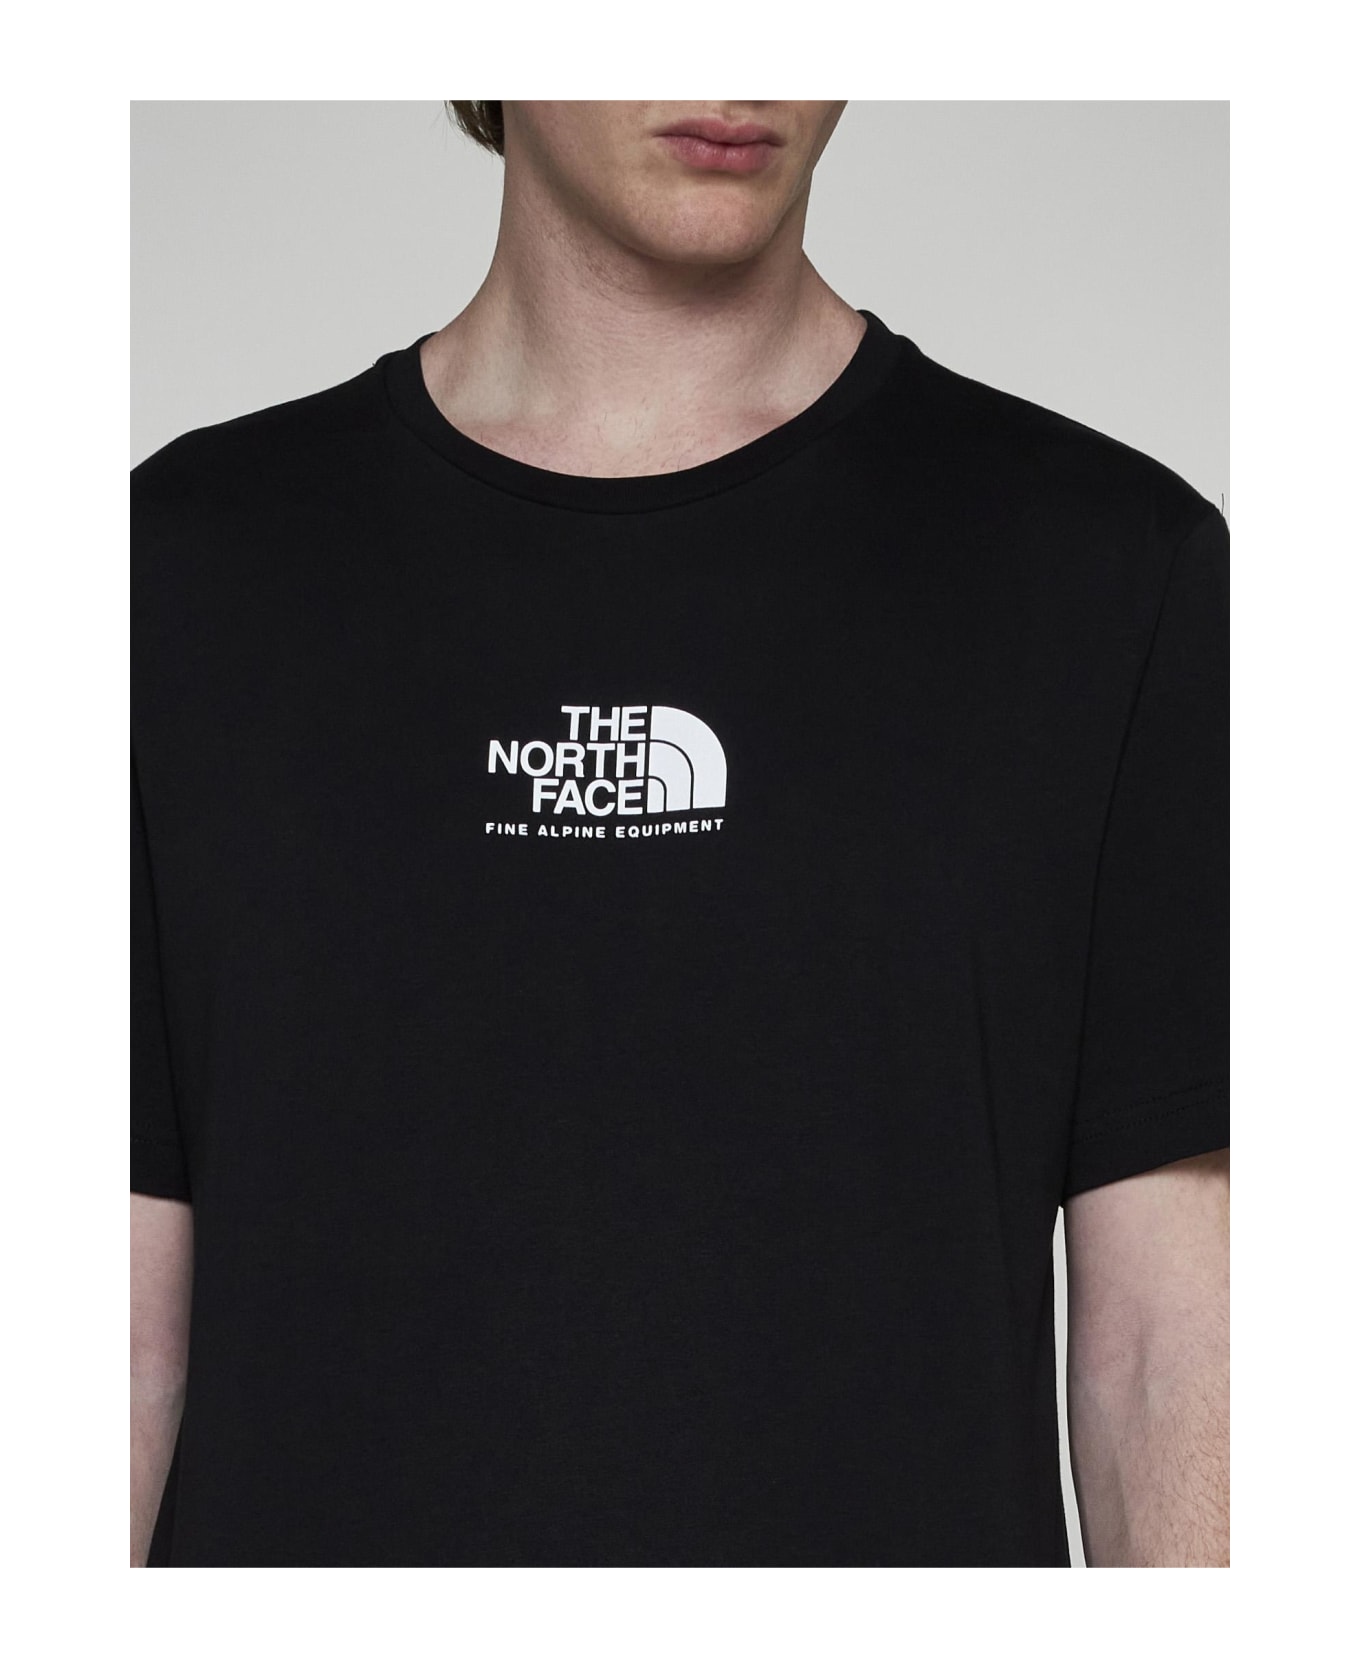 The North Face Fine Alpine Equipment 3 Cotton T-shirt - Black